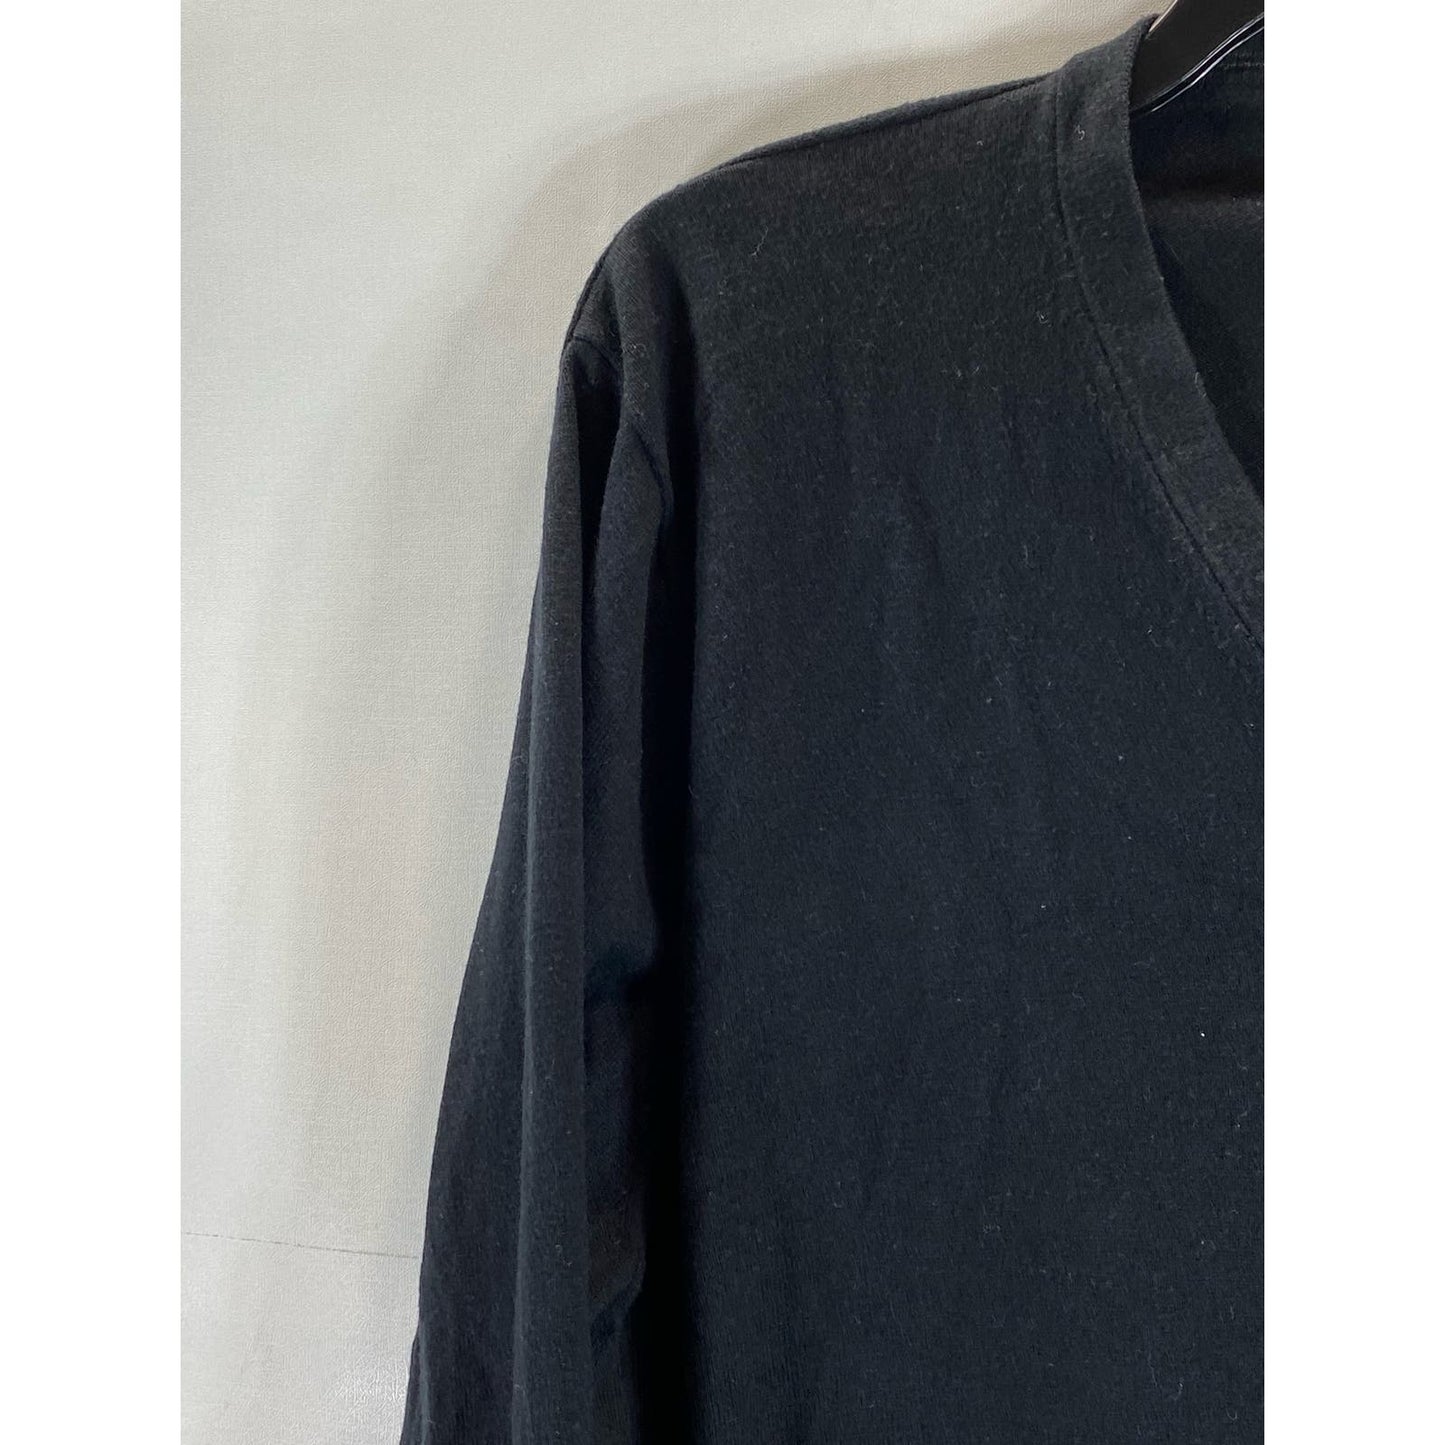 BANANA REPUBLIC Men's Black Solid V-Neck Luxury Blend Pullover Sweater SZ XL